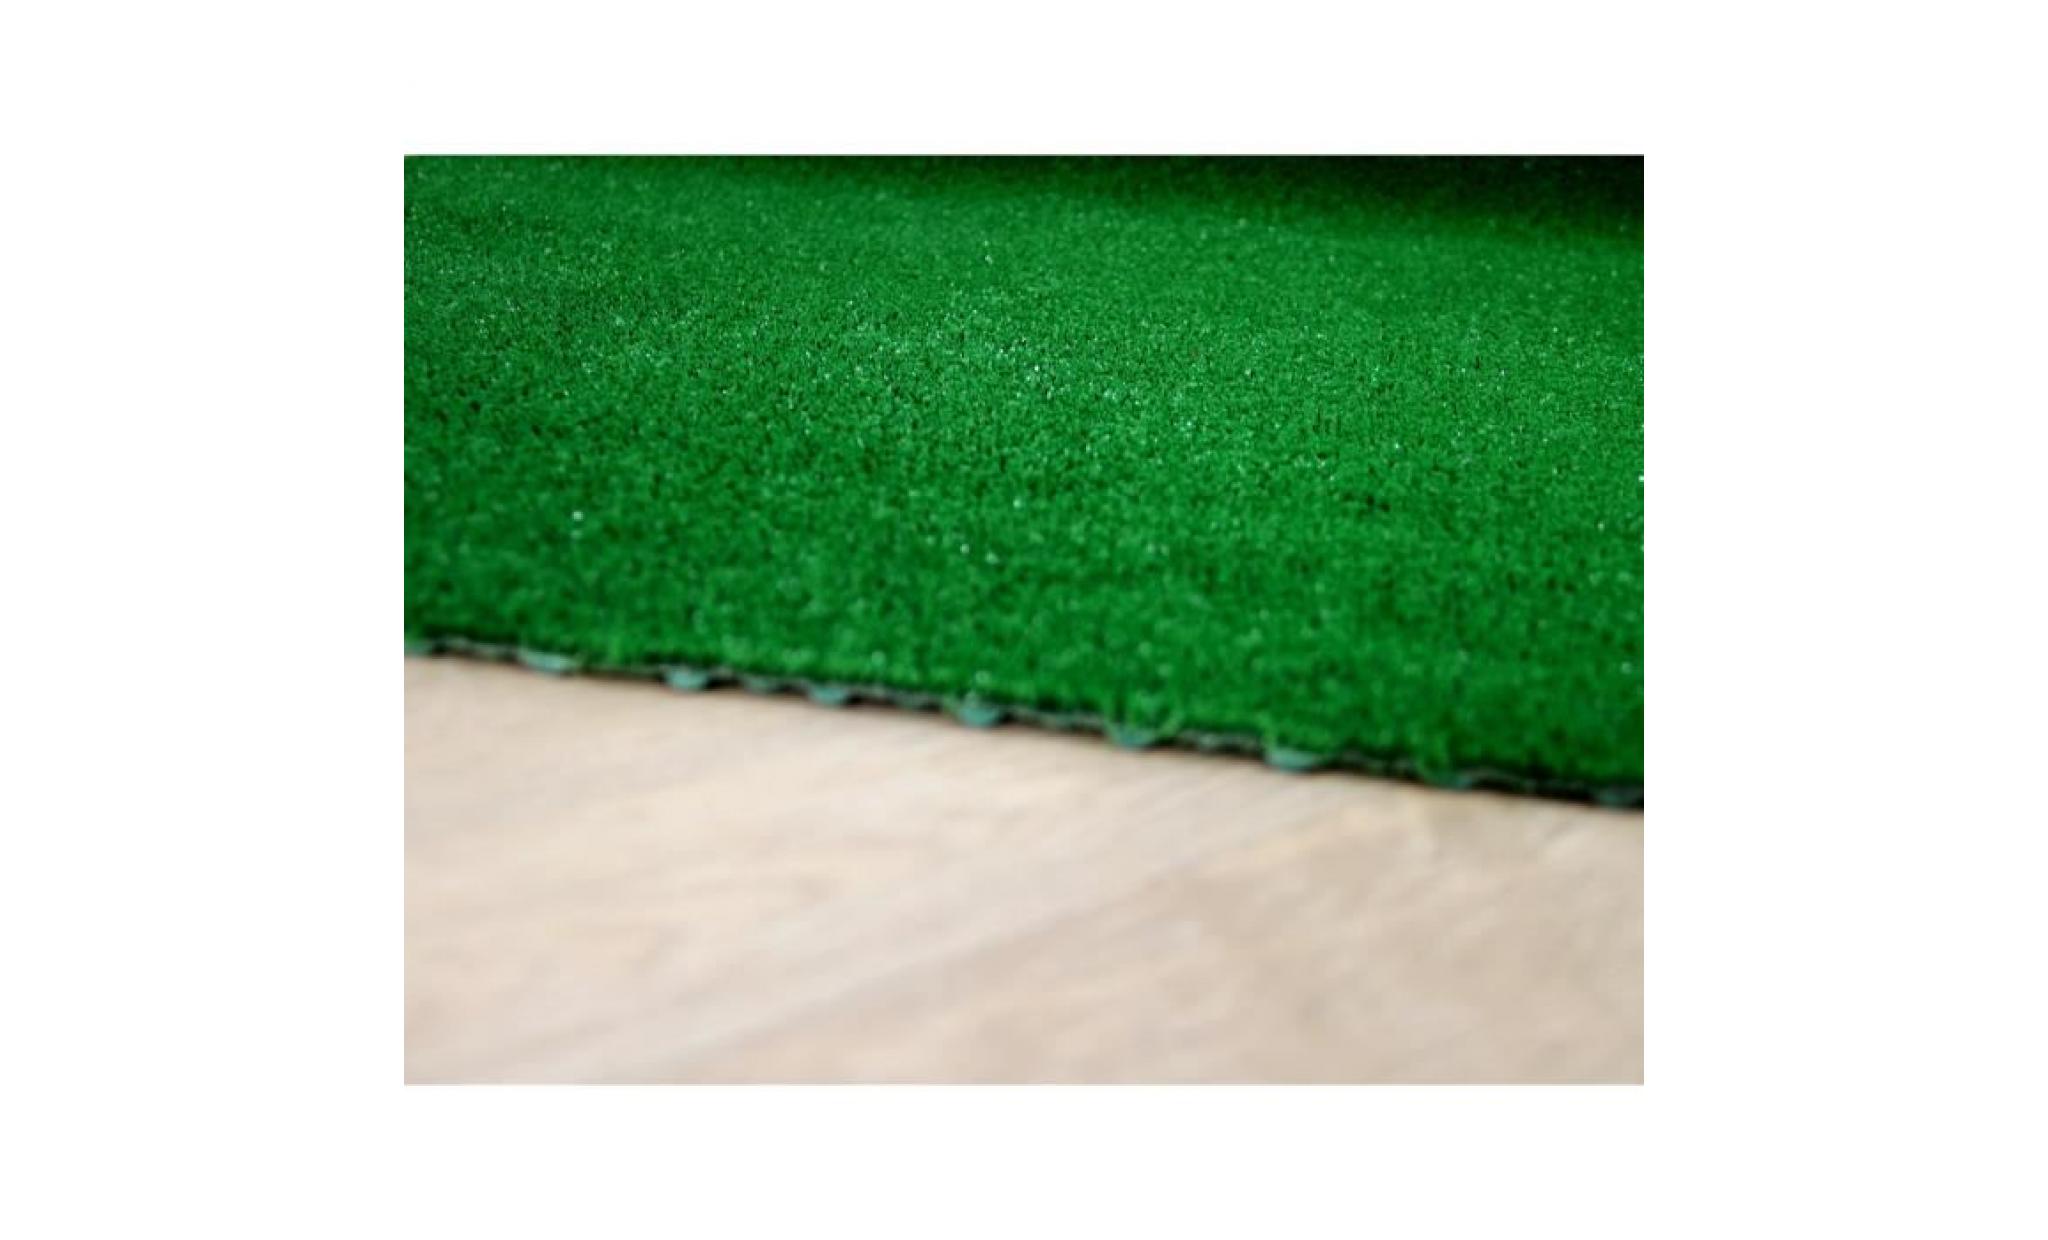 york   tapis type gazon artificiel avec nubs – pour jardin, terrasse, balcon   vert   [200x250 cm] pas cher